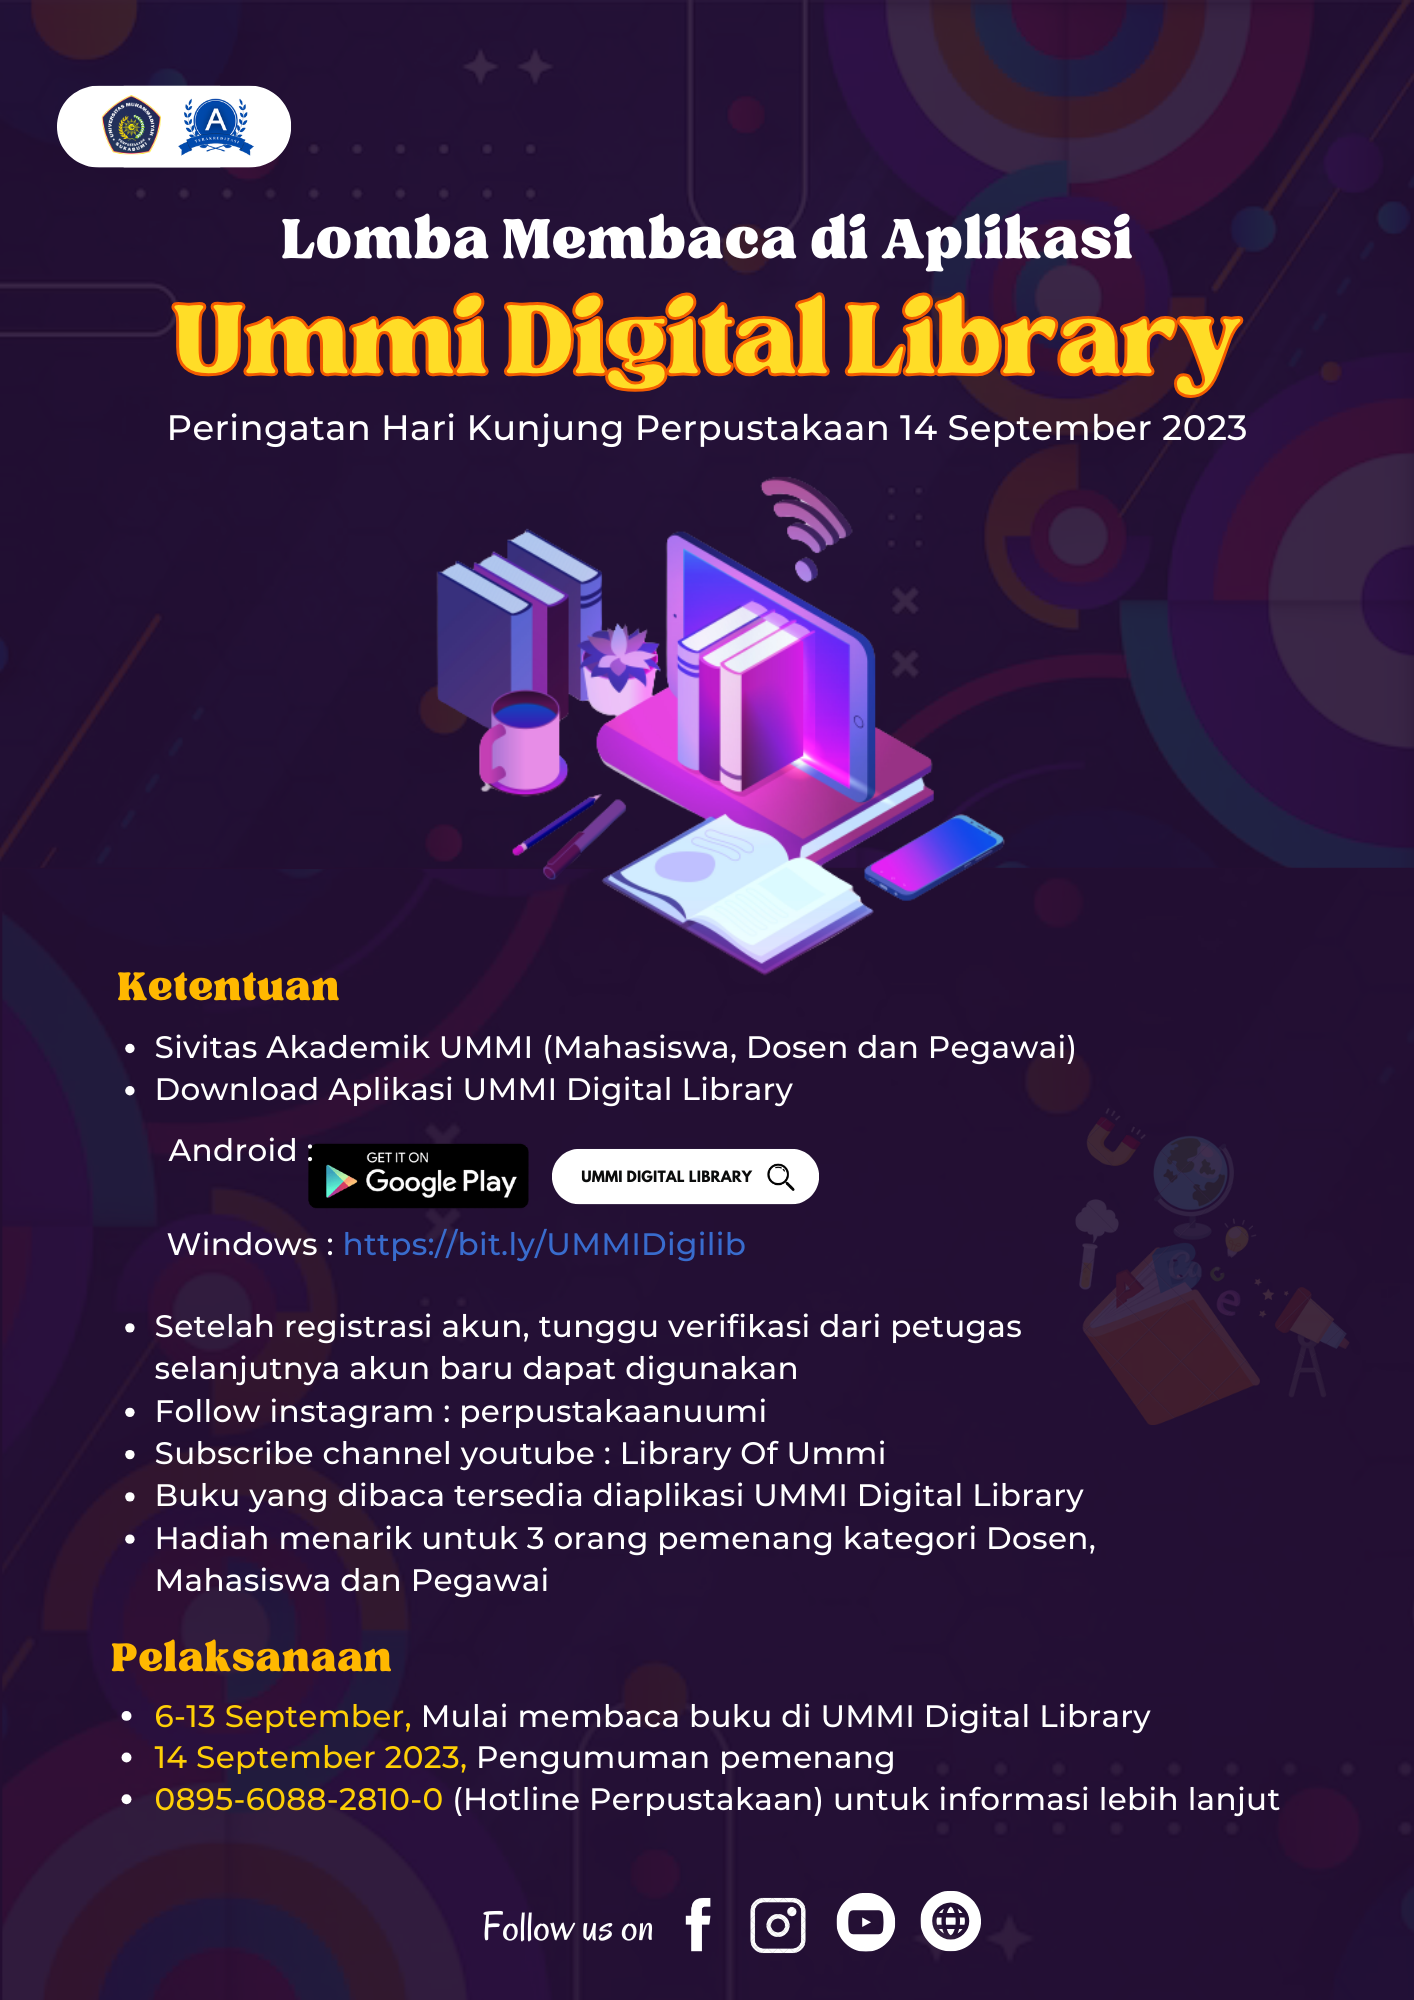 Lomba Membaca Diaplikasi UMMI Digital Library